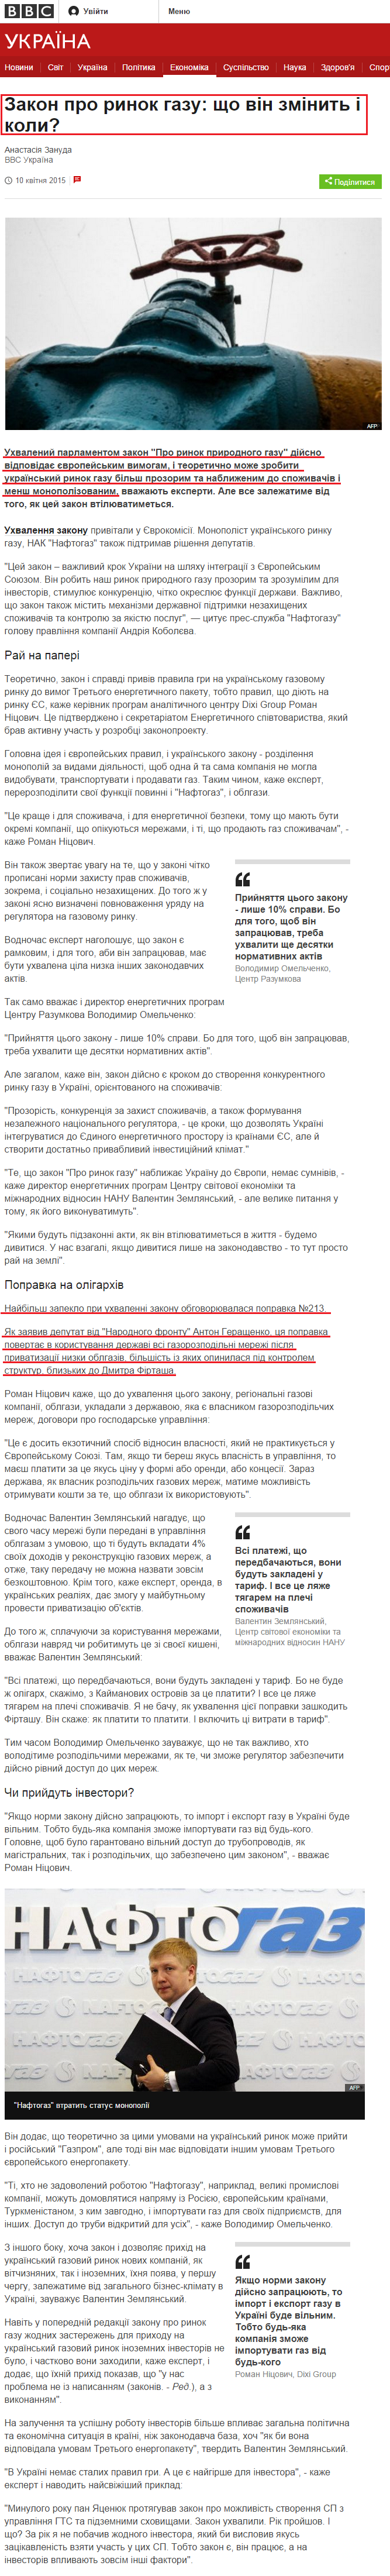 http://www.bbc.com/ukrainian/business/2015/04/150410_gas_market_law_az